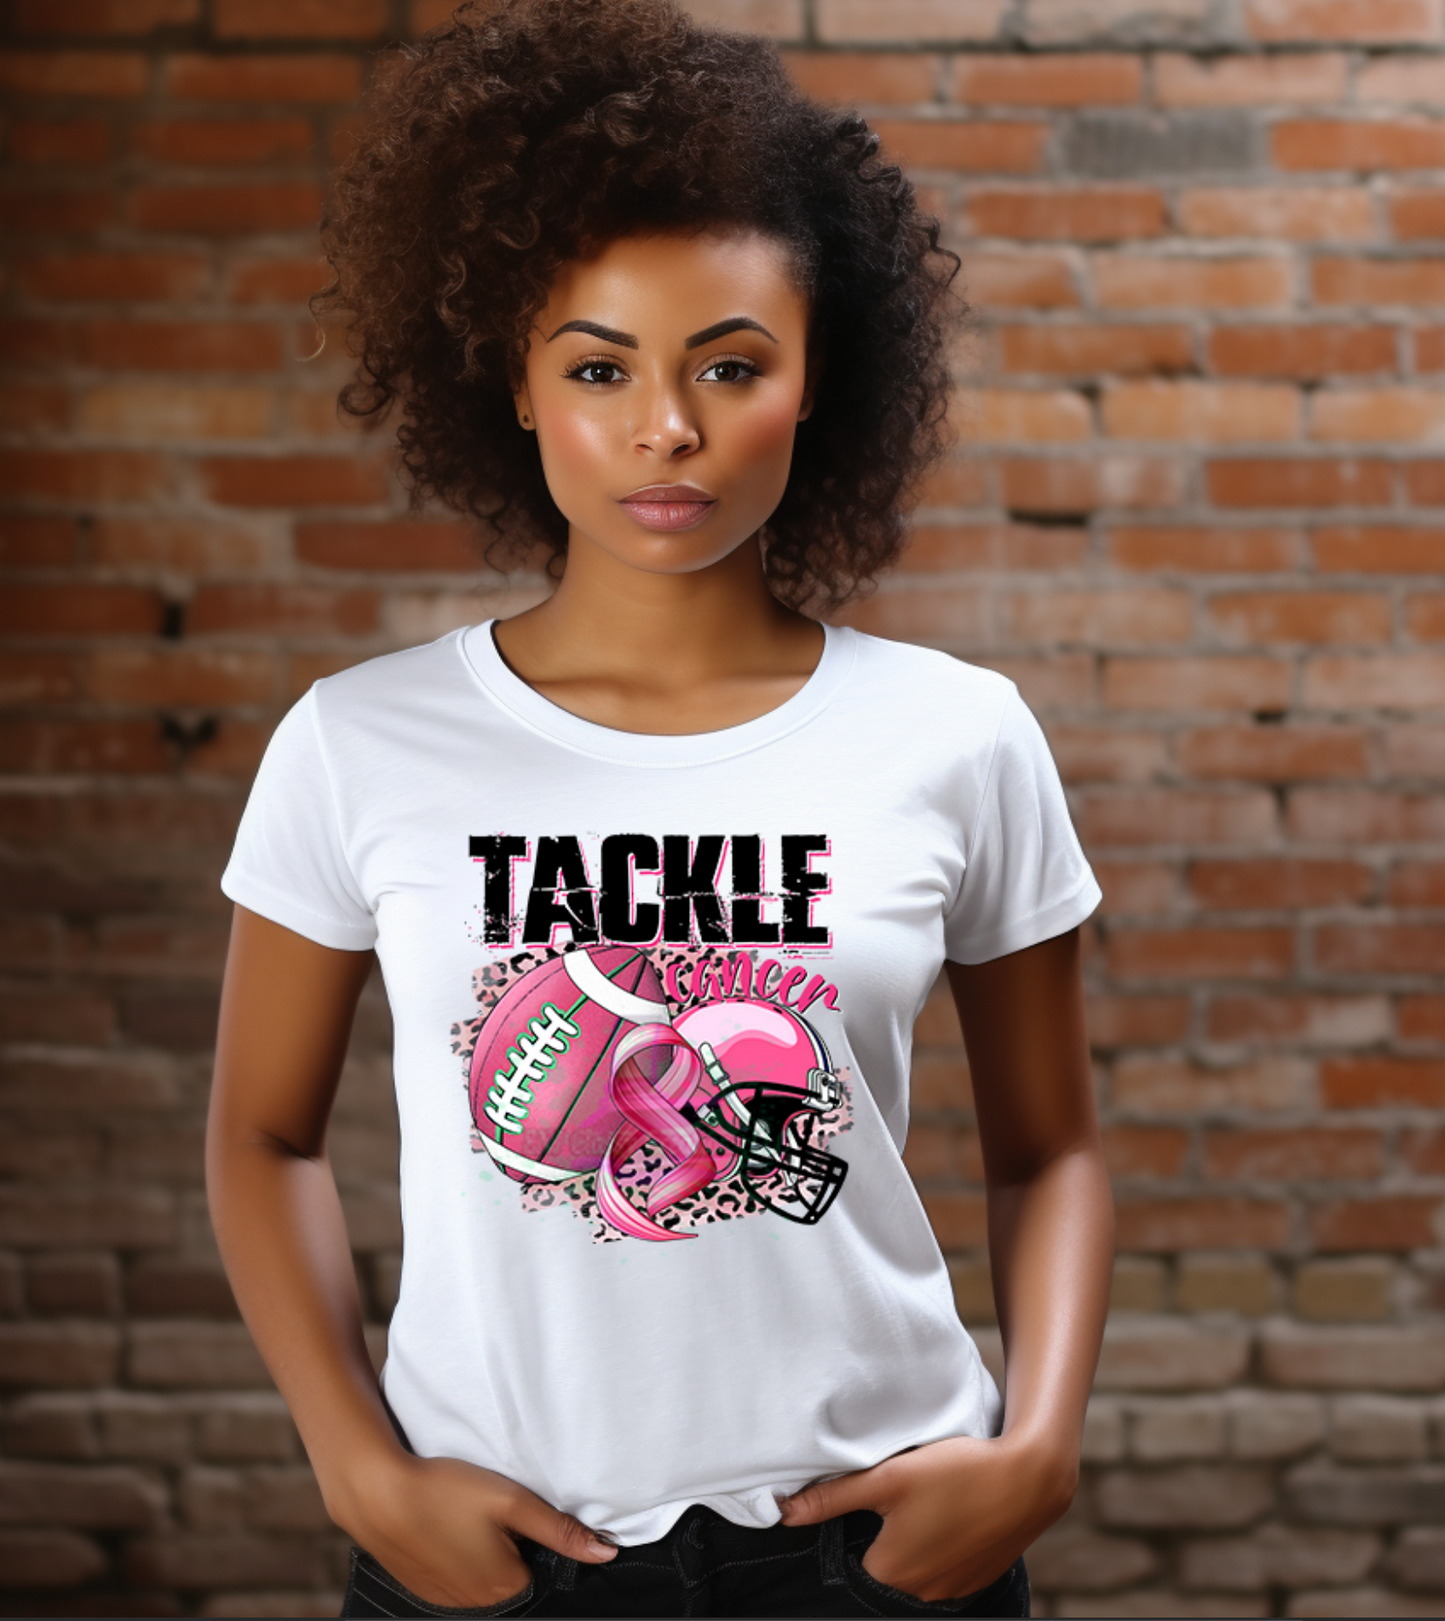 Tackle Cancer Shirt